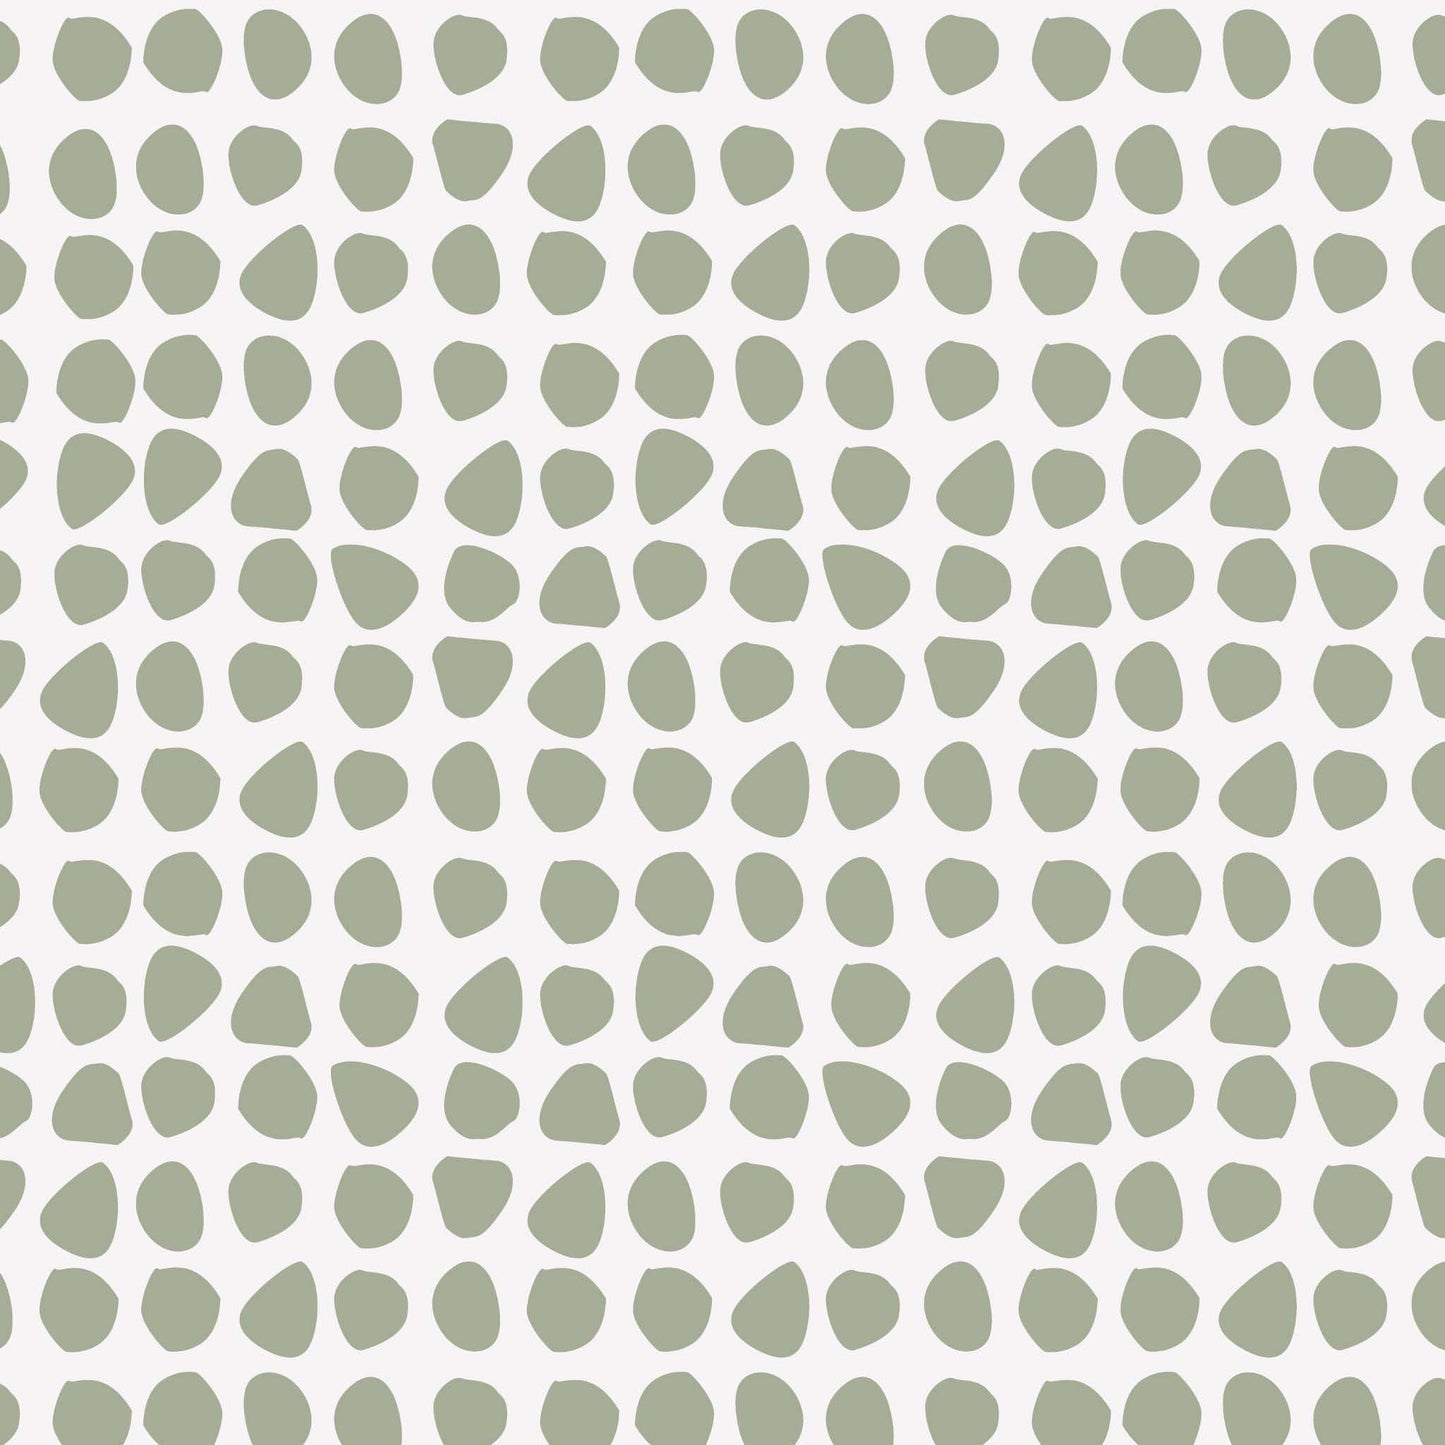 Closeup view of Organic Dots Wallpaper in Sage Green by artist Brenda Bird